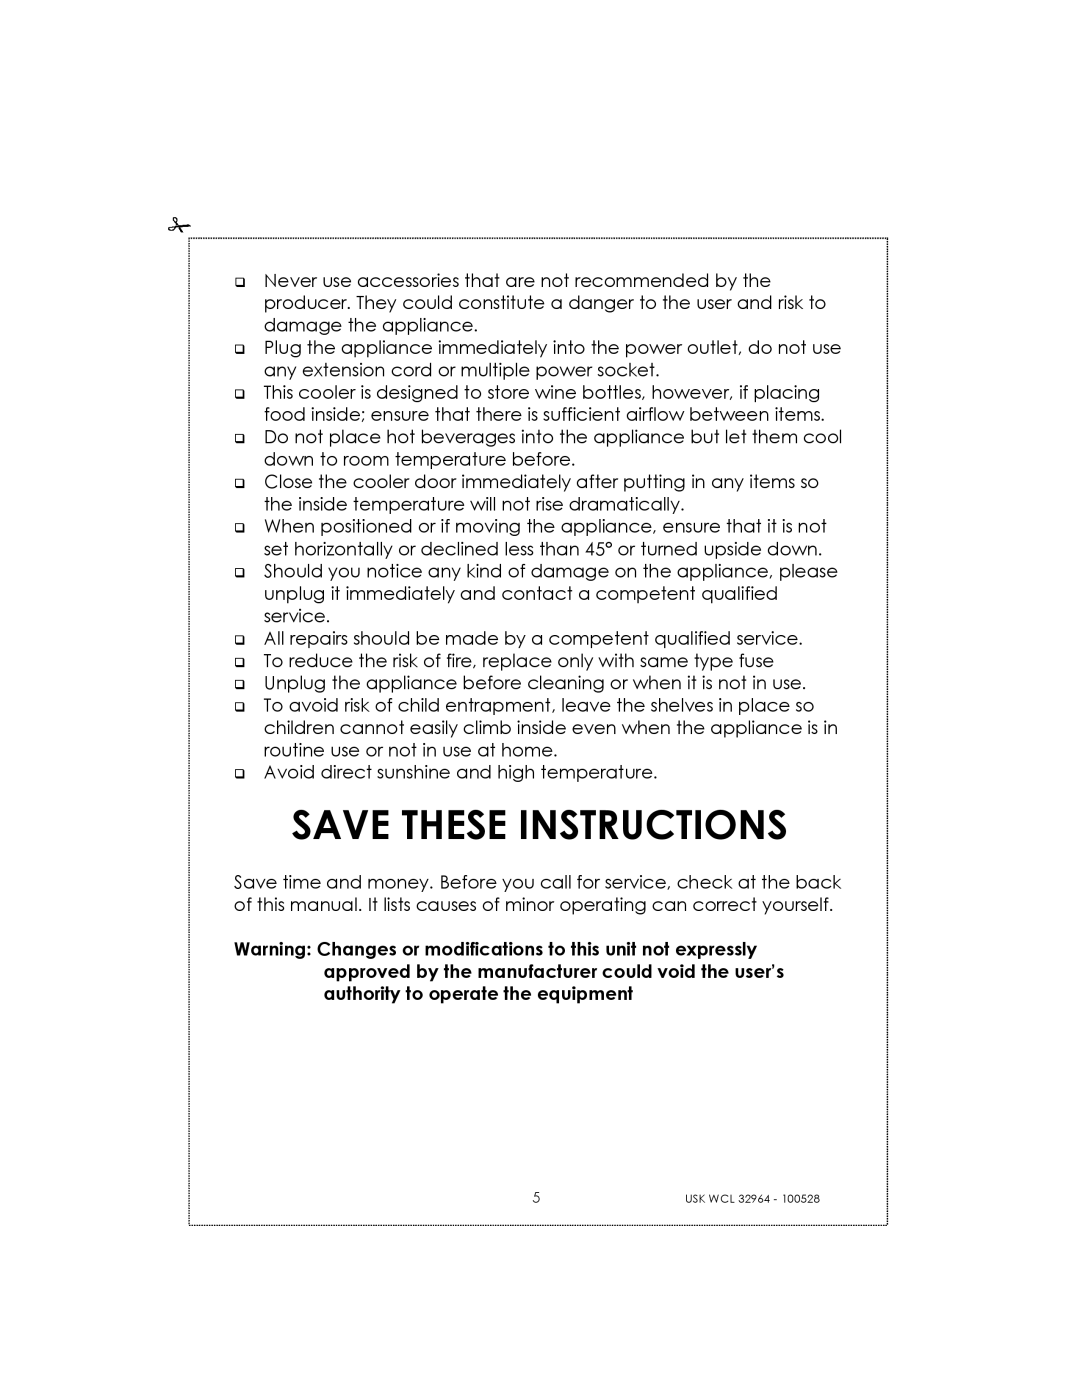 Kalorik USK WCL 32964 manual Save These Instructions 